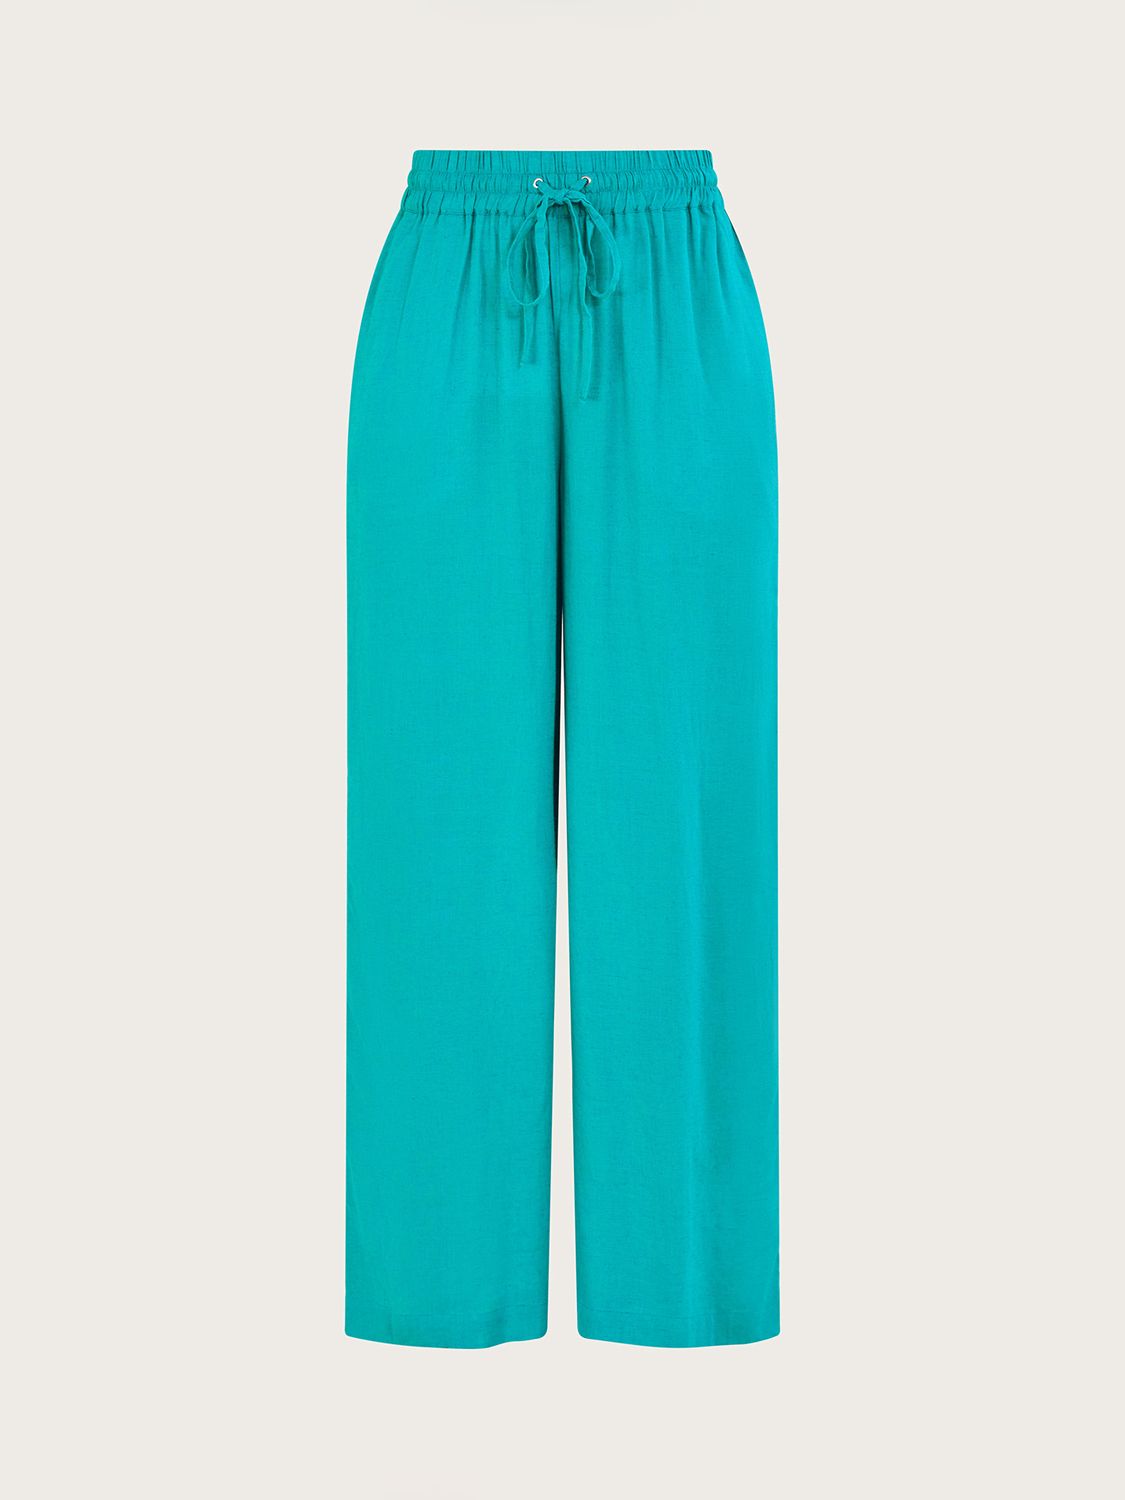 Monsoon Vicki Linen Blend Wide Leg Trousers, Turquoise, S